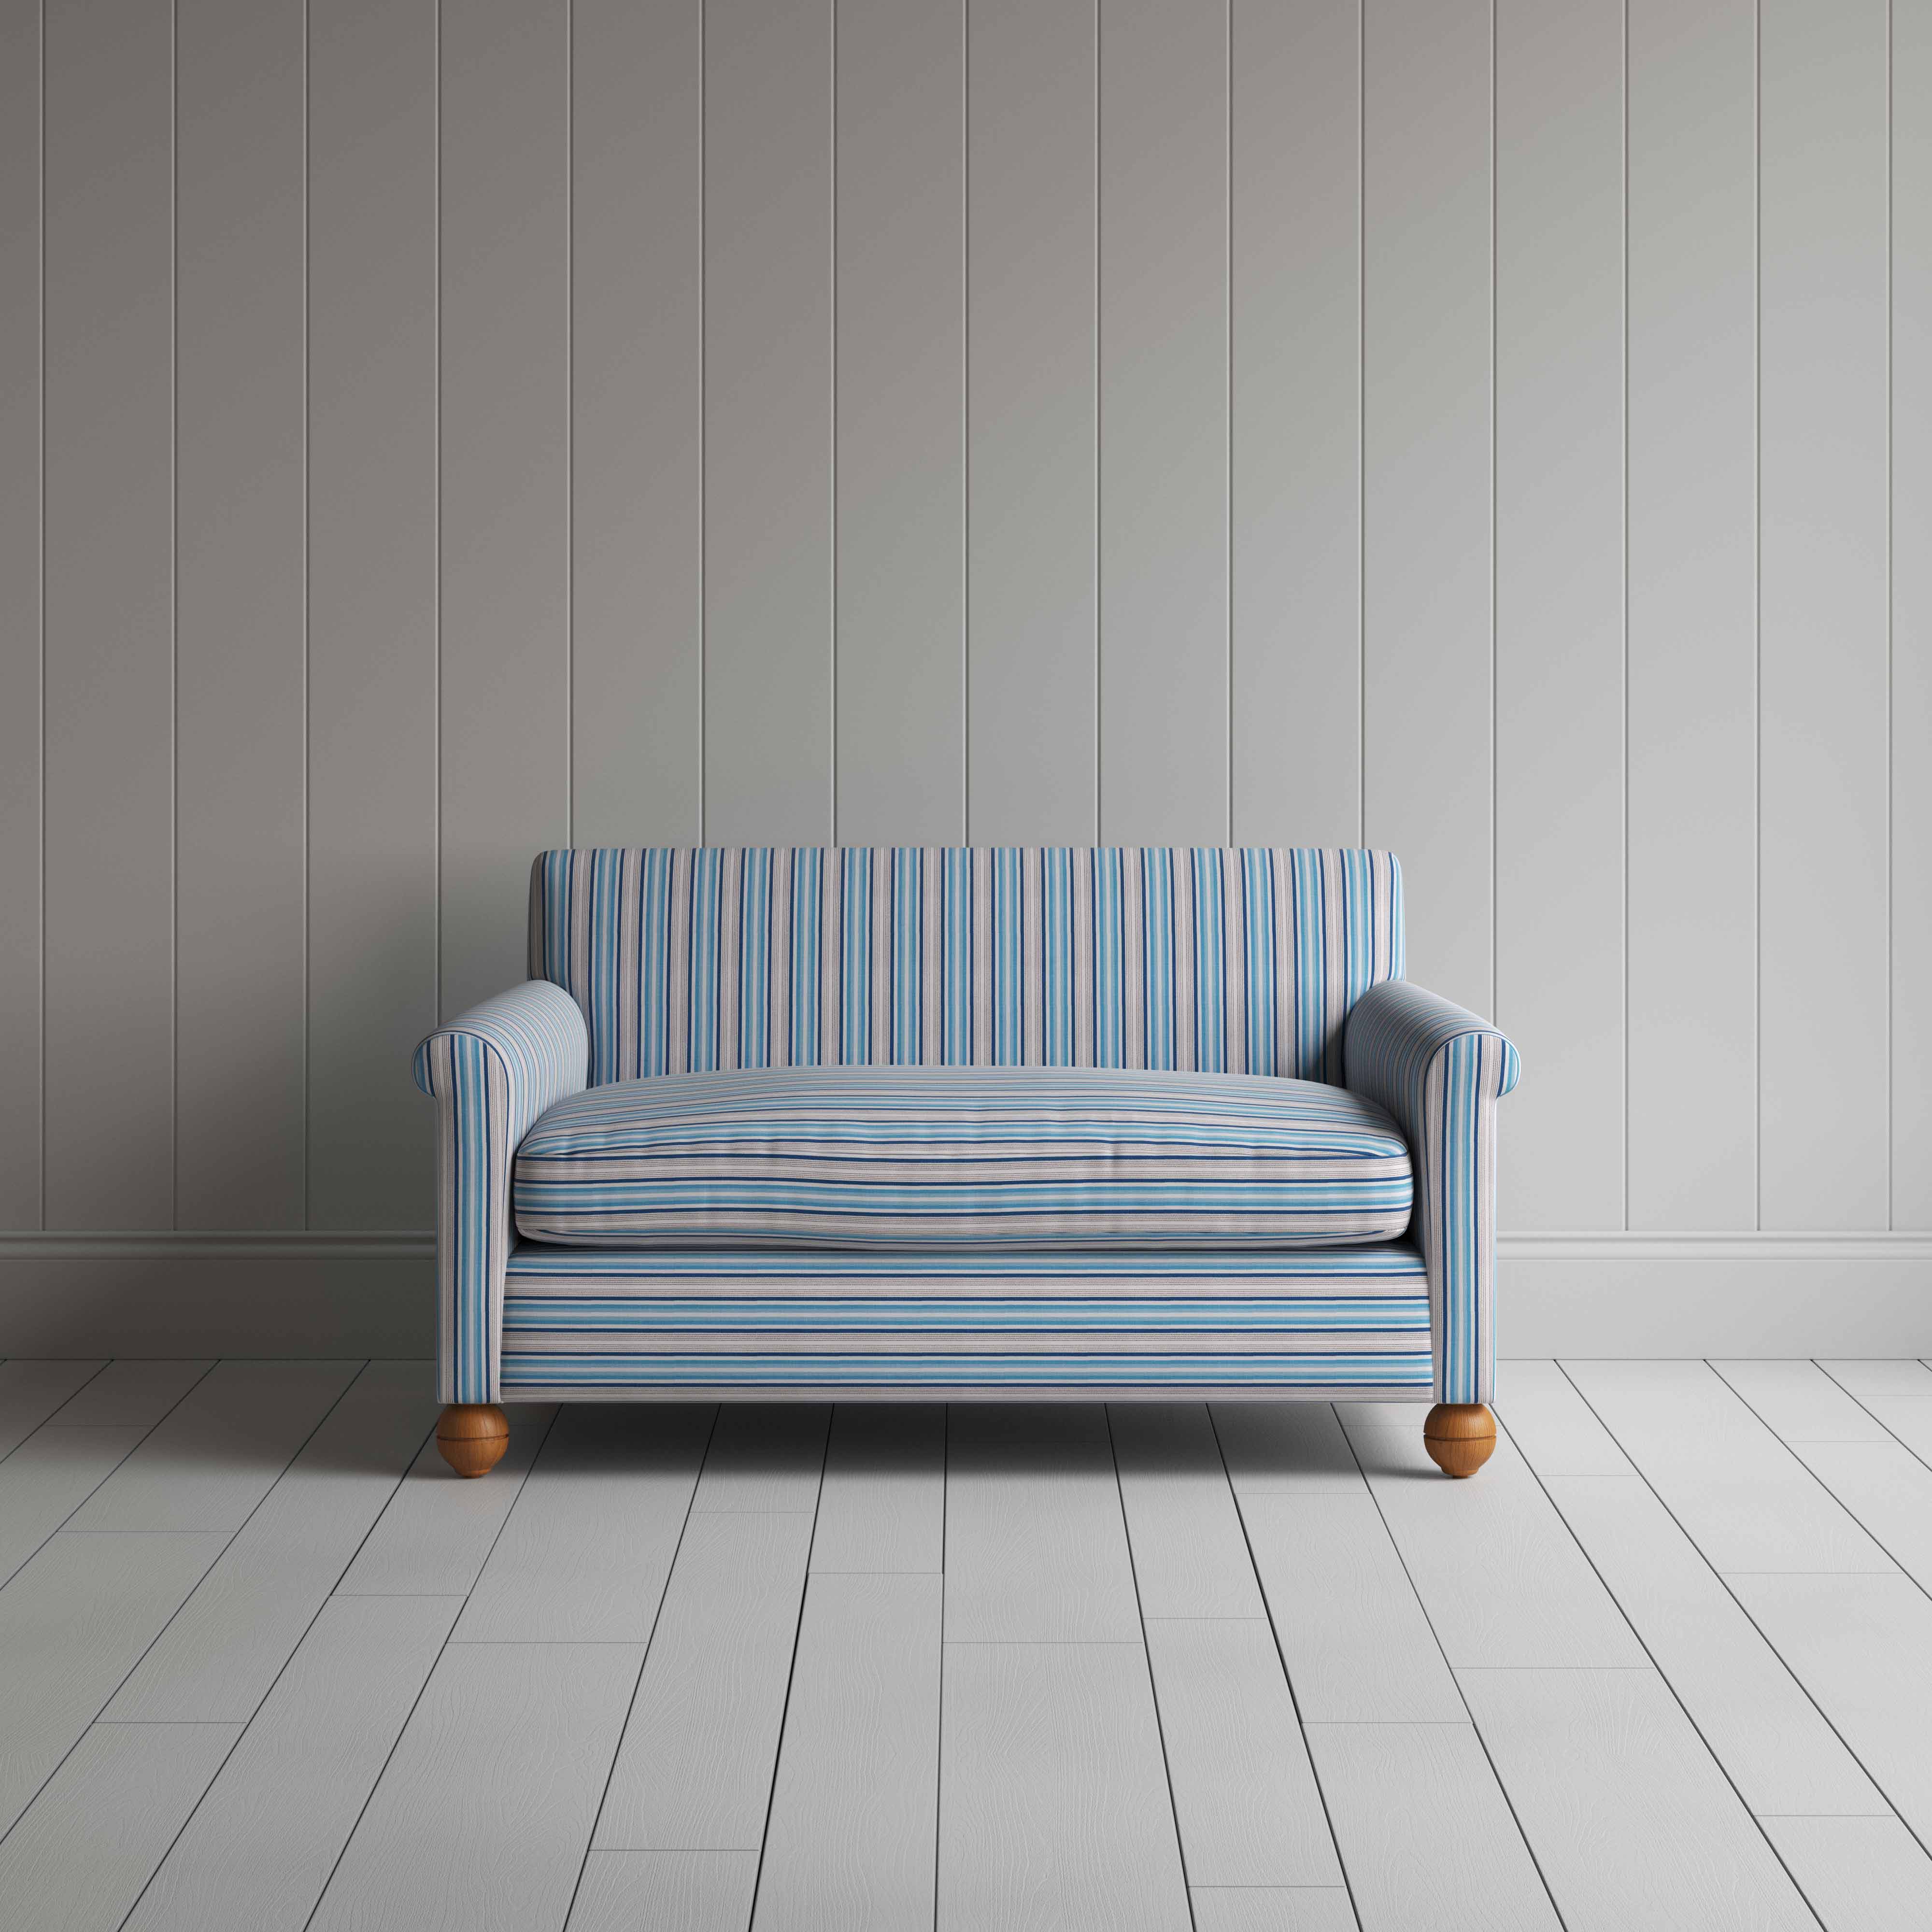  Idler 2 Seater Sofa in Slow Lane Cotton Linen, Blue 